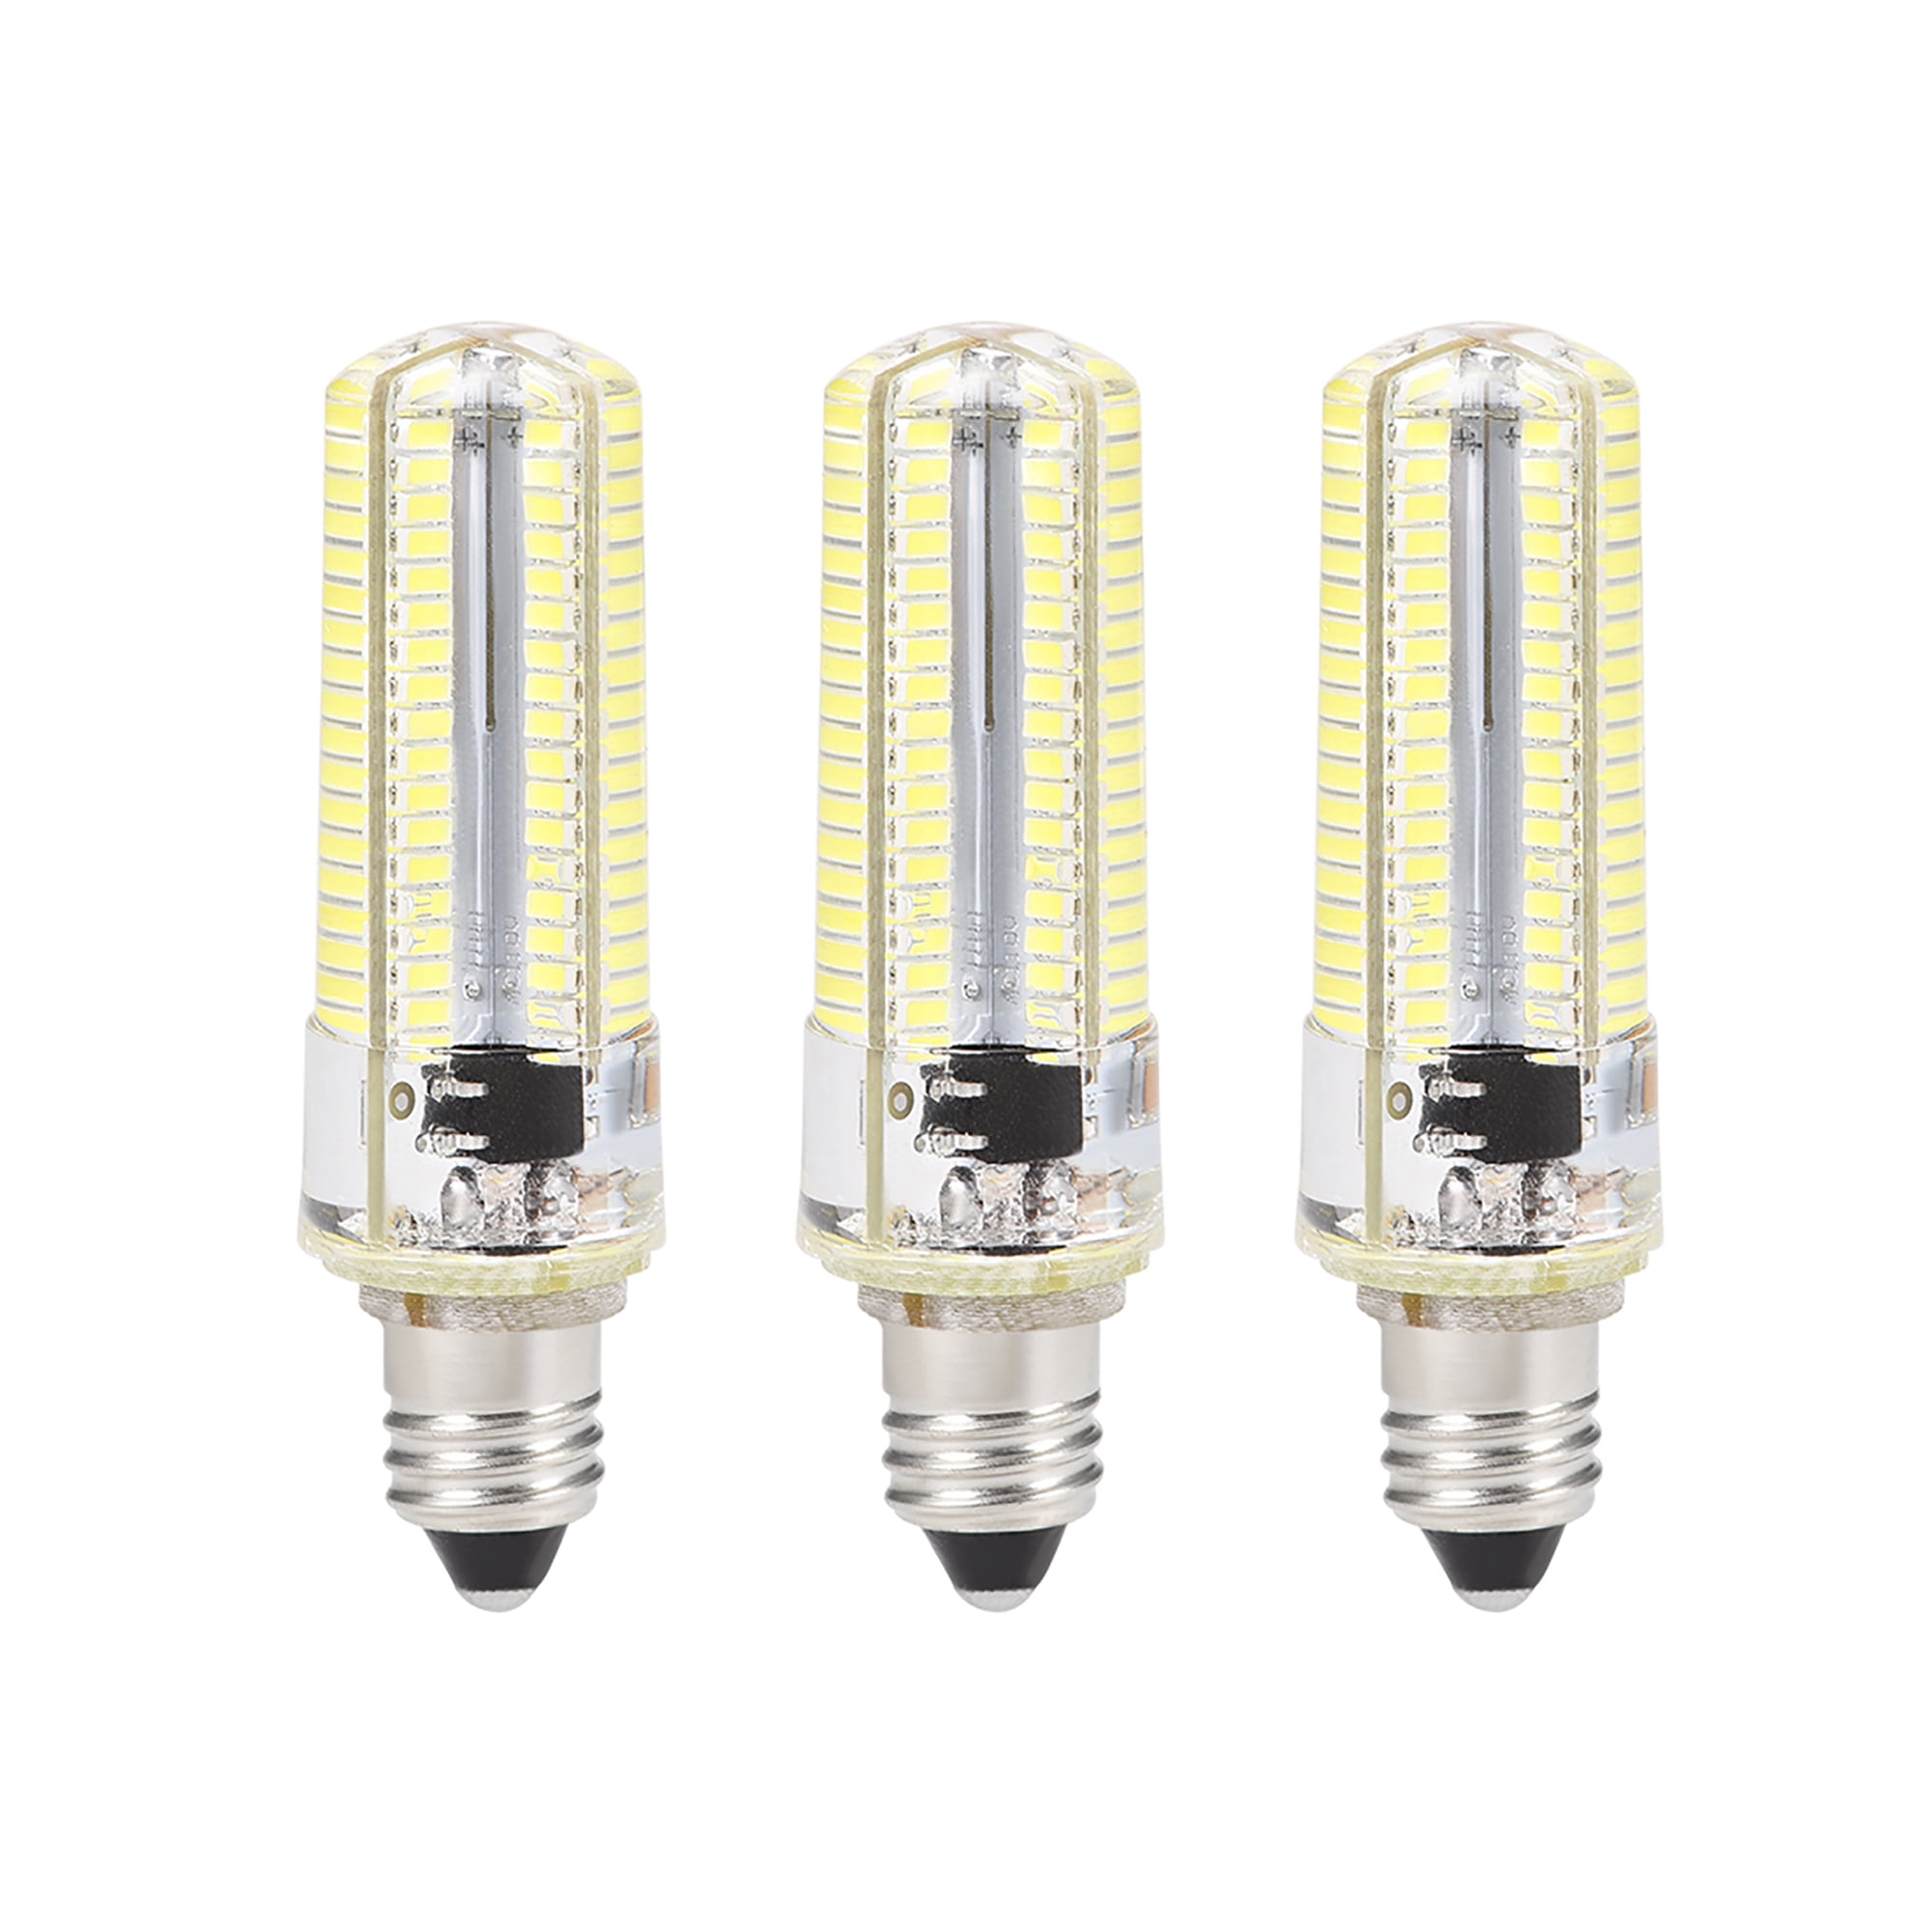 2Pcs Light Bulbs E14 LED 4W Microwave Oven Bulb Range Hood Bulb Appliance Bulb 